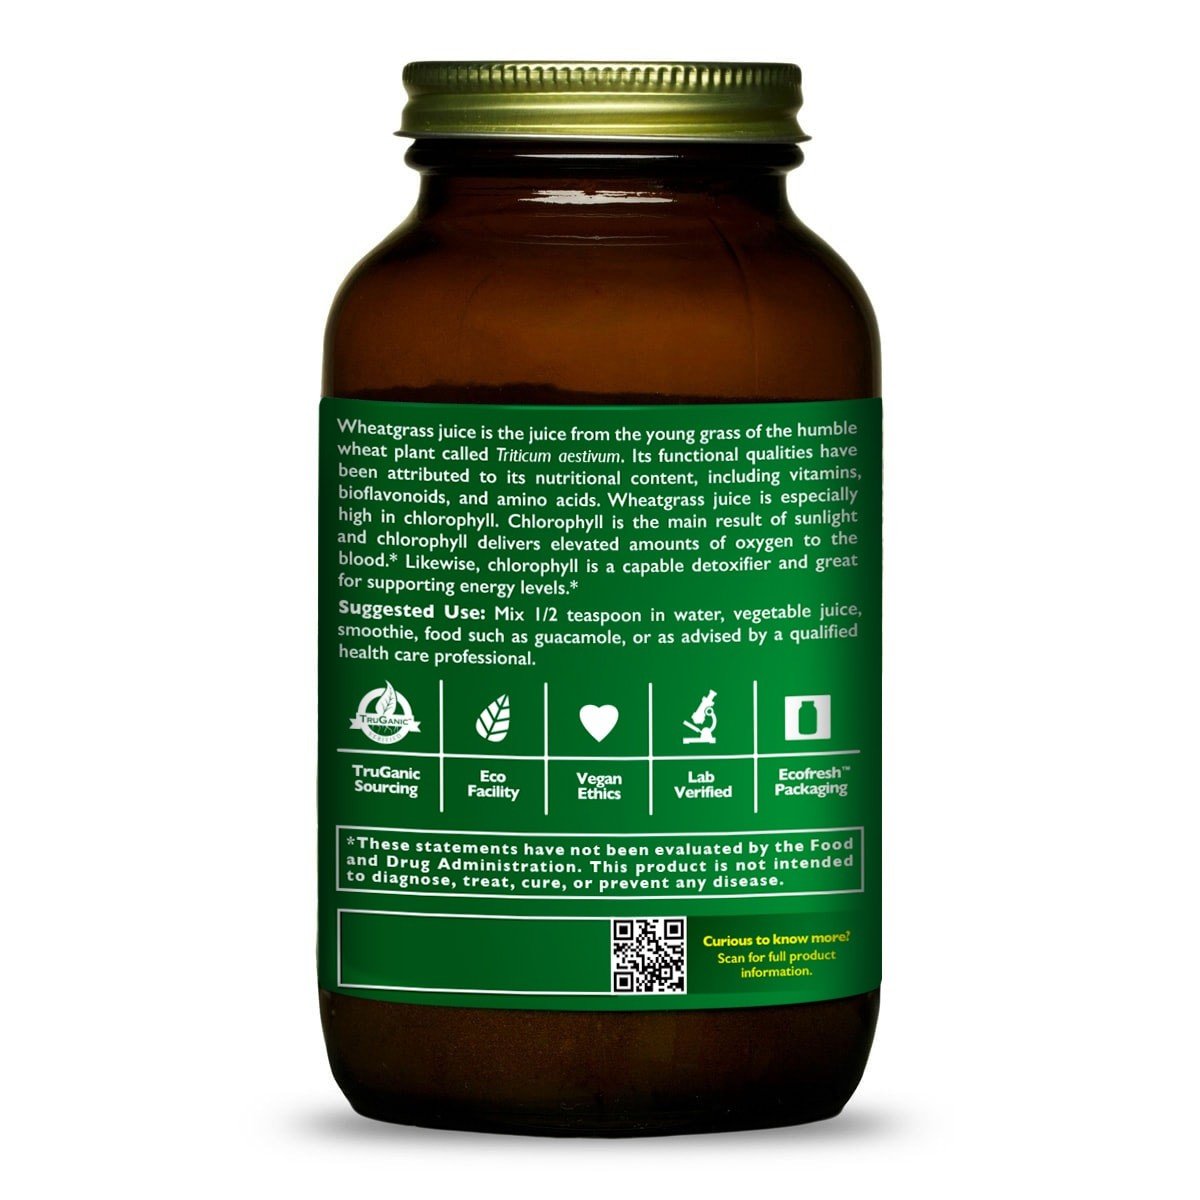 HealthForce Superfoods Superfoods Wheat Grass Juice 8 oz Powder